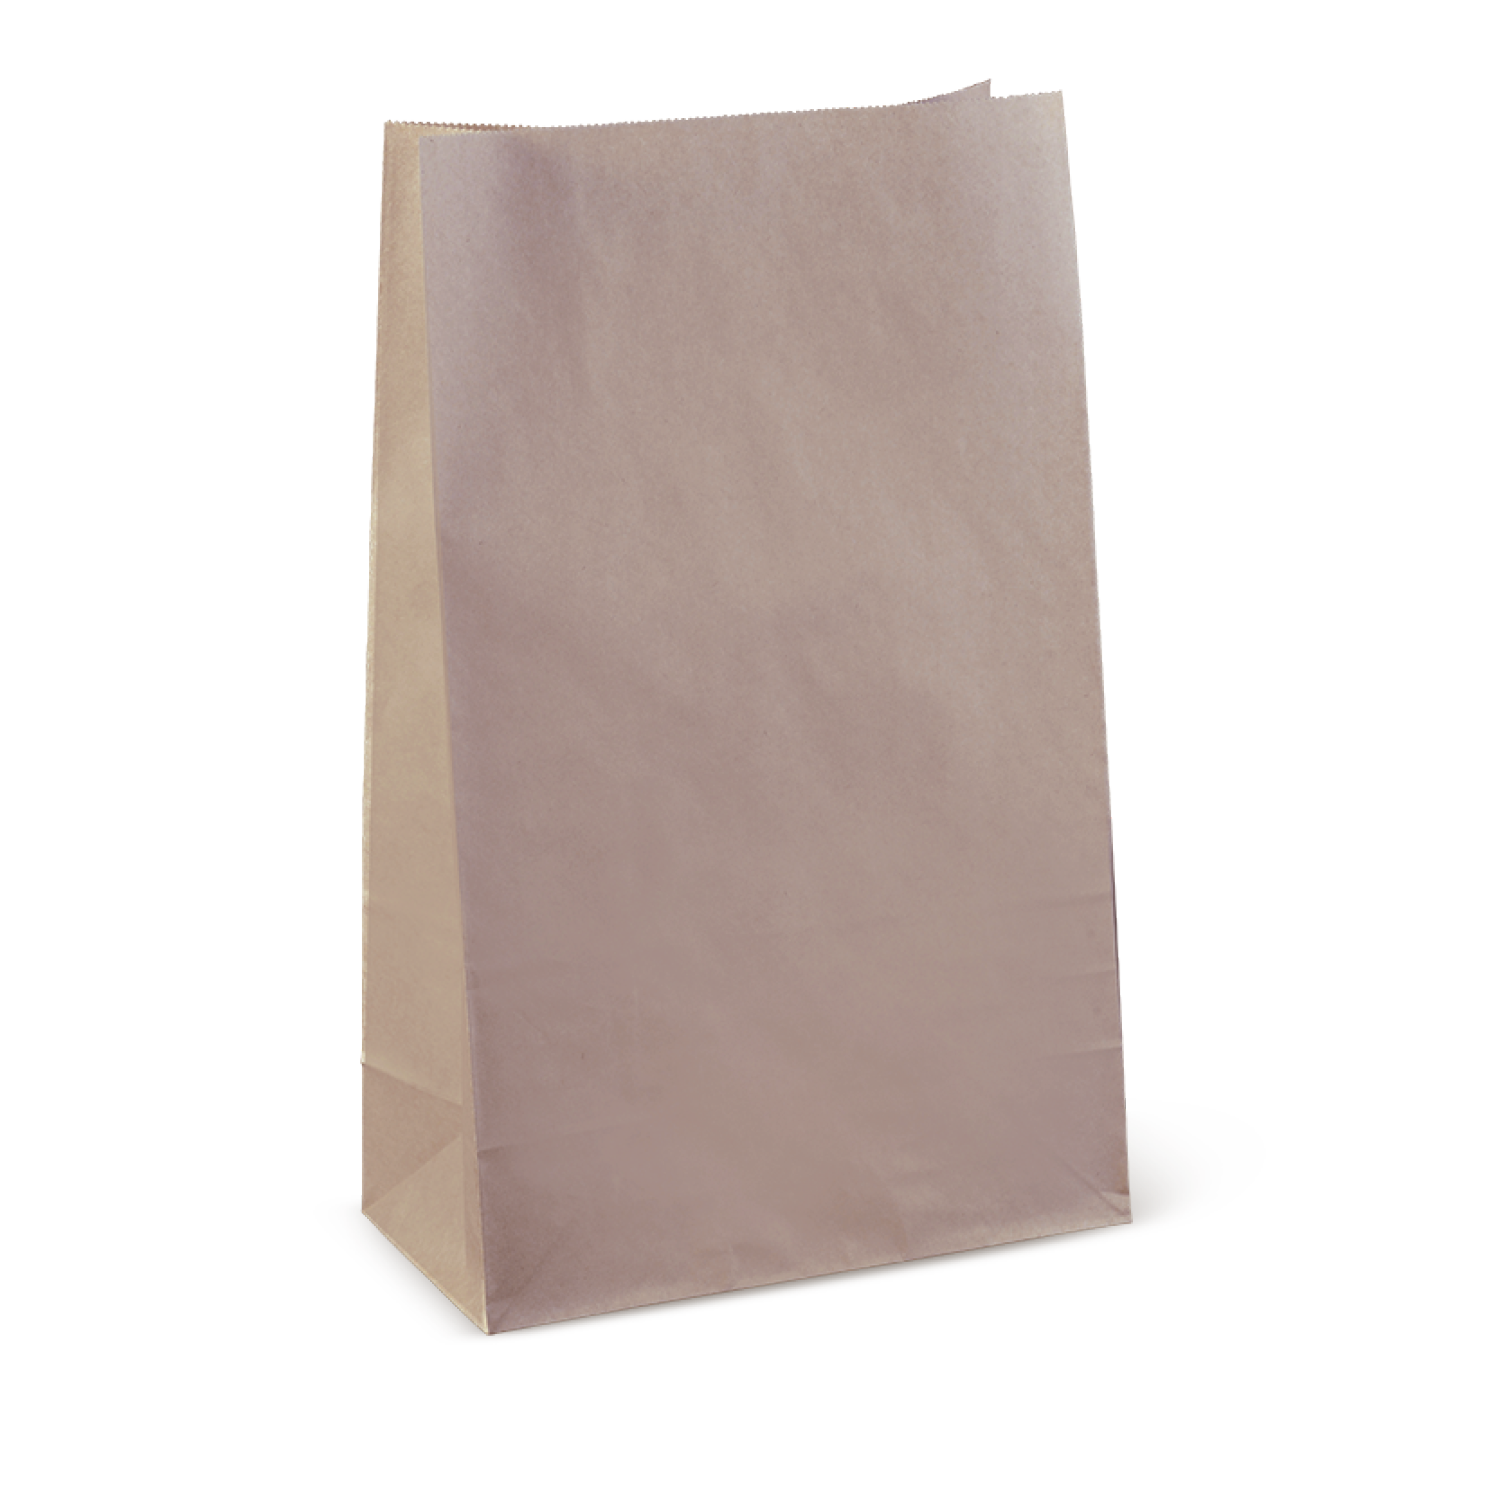 Checkout Bag Paper #25 Brown Ex Large (540mm x 355mm x 165mm) (Carton 100)